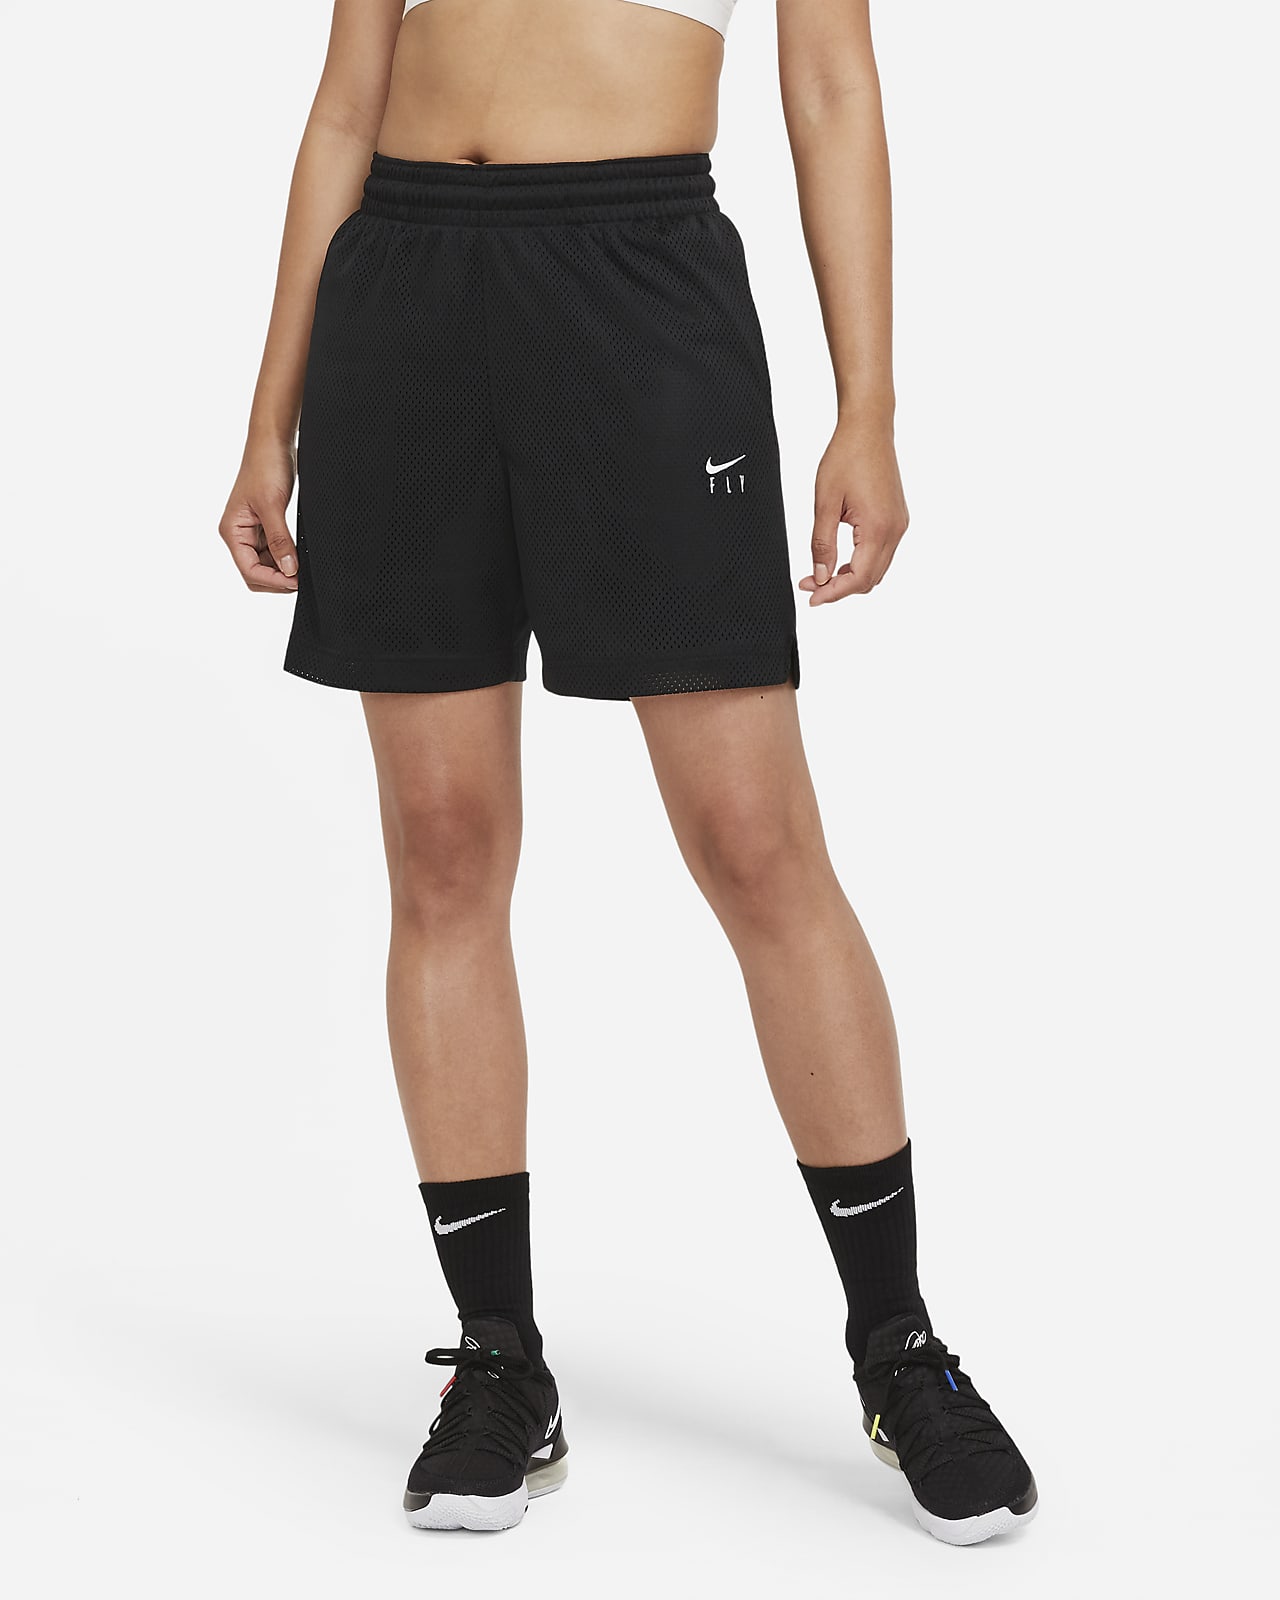 nike women's basketball shorts